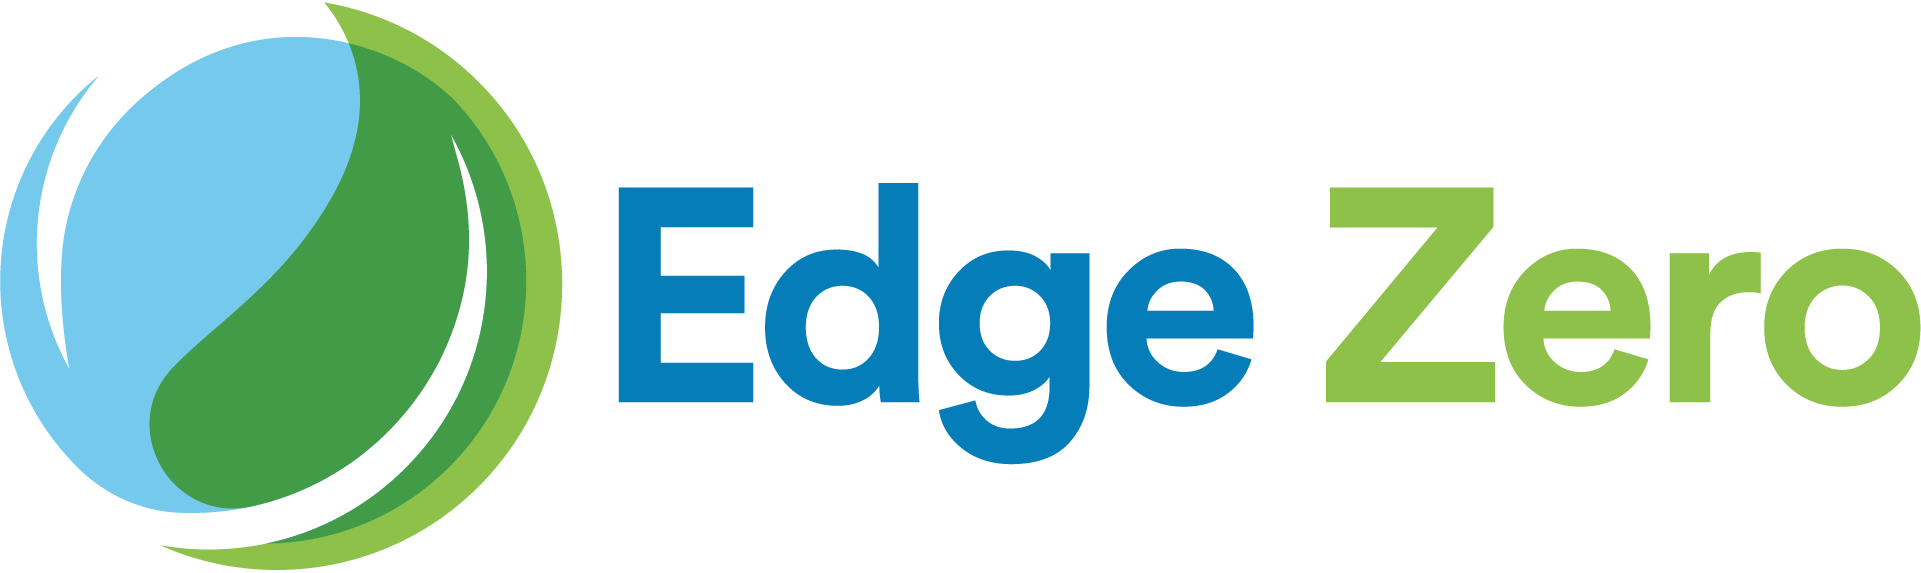 Edge Zero